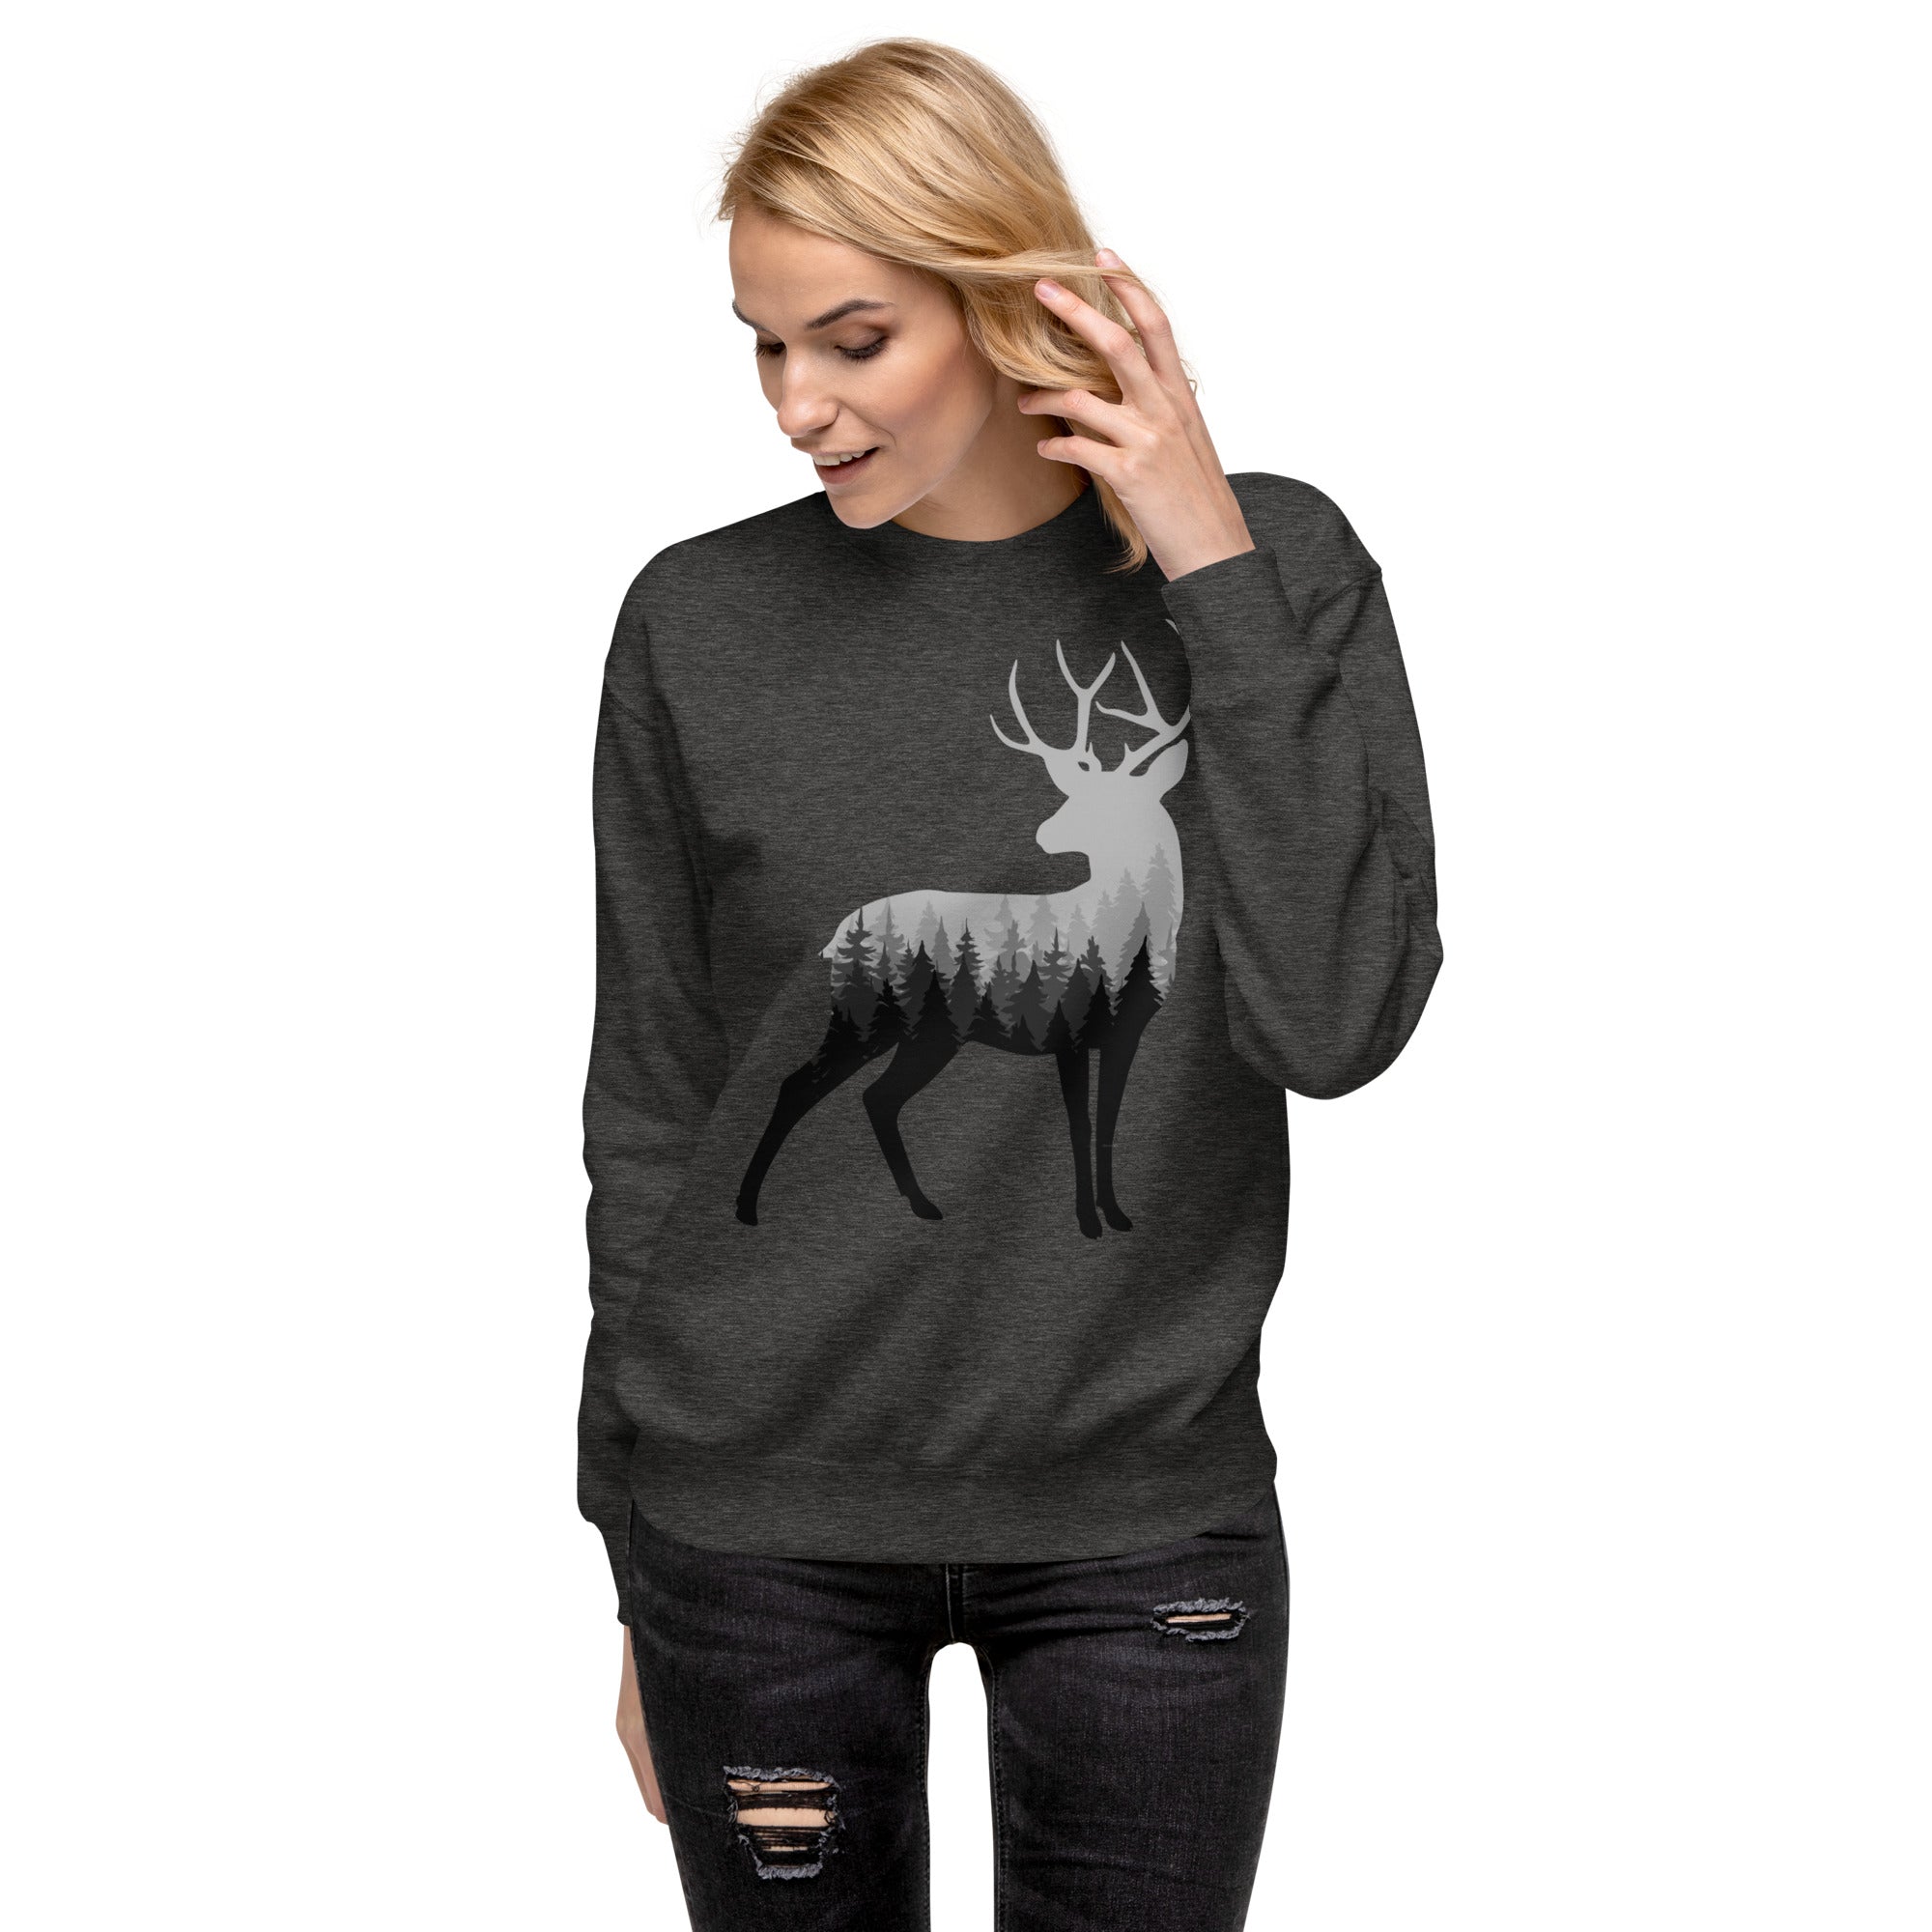 Buck n' Trees Women's Premium Sweatshirt